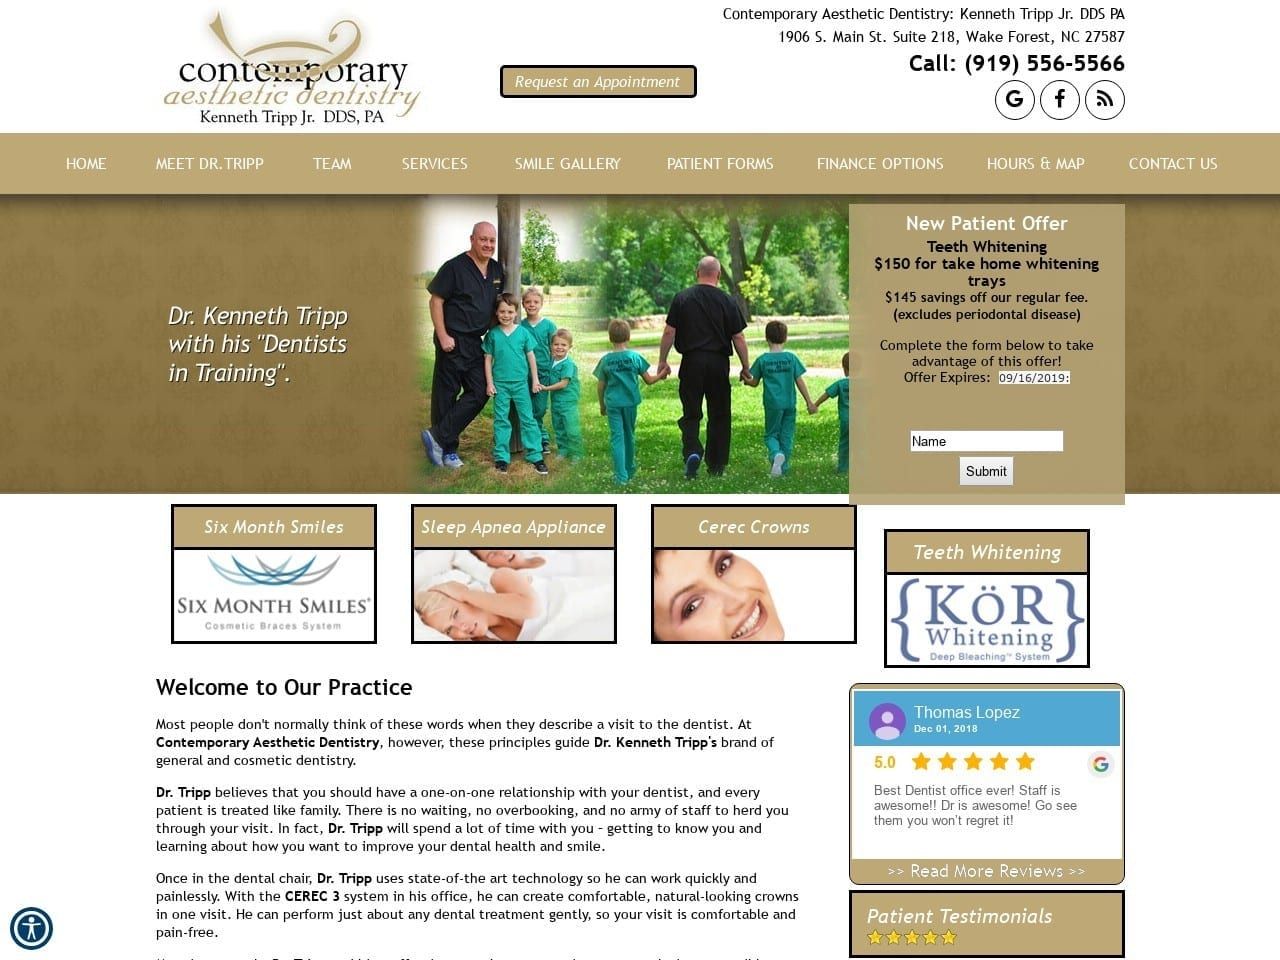 Contemporary Aesthetic Dentistry Kenneth Tripp Jr. Website Screenshot from drkennethtripp.com